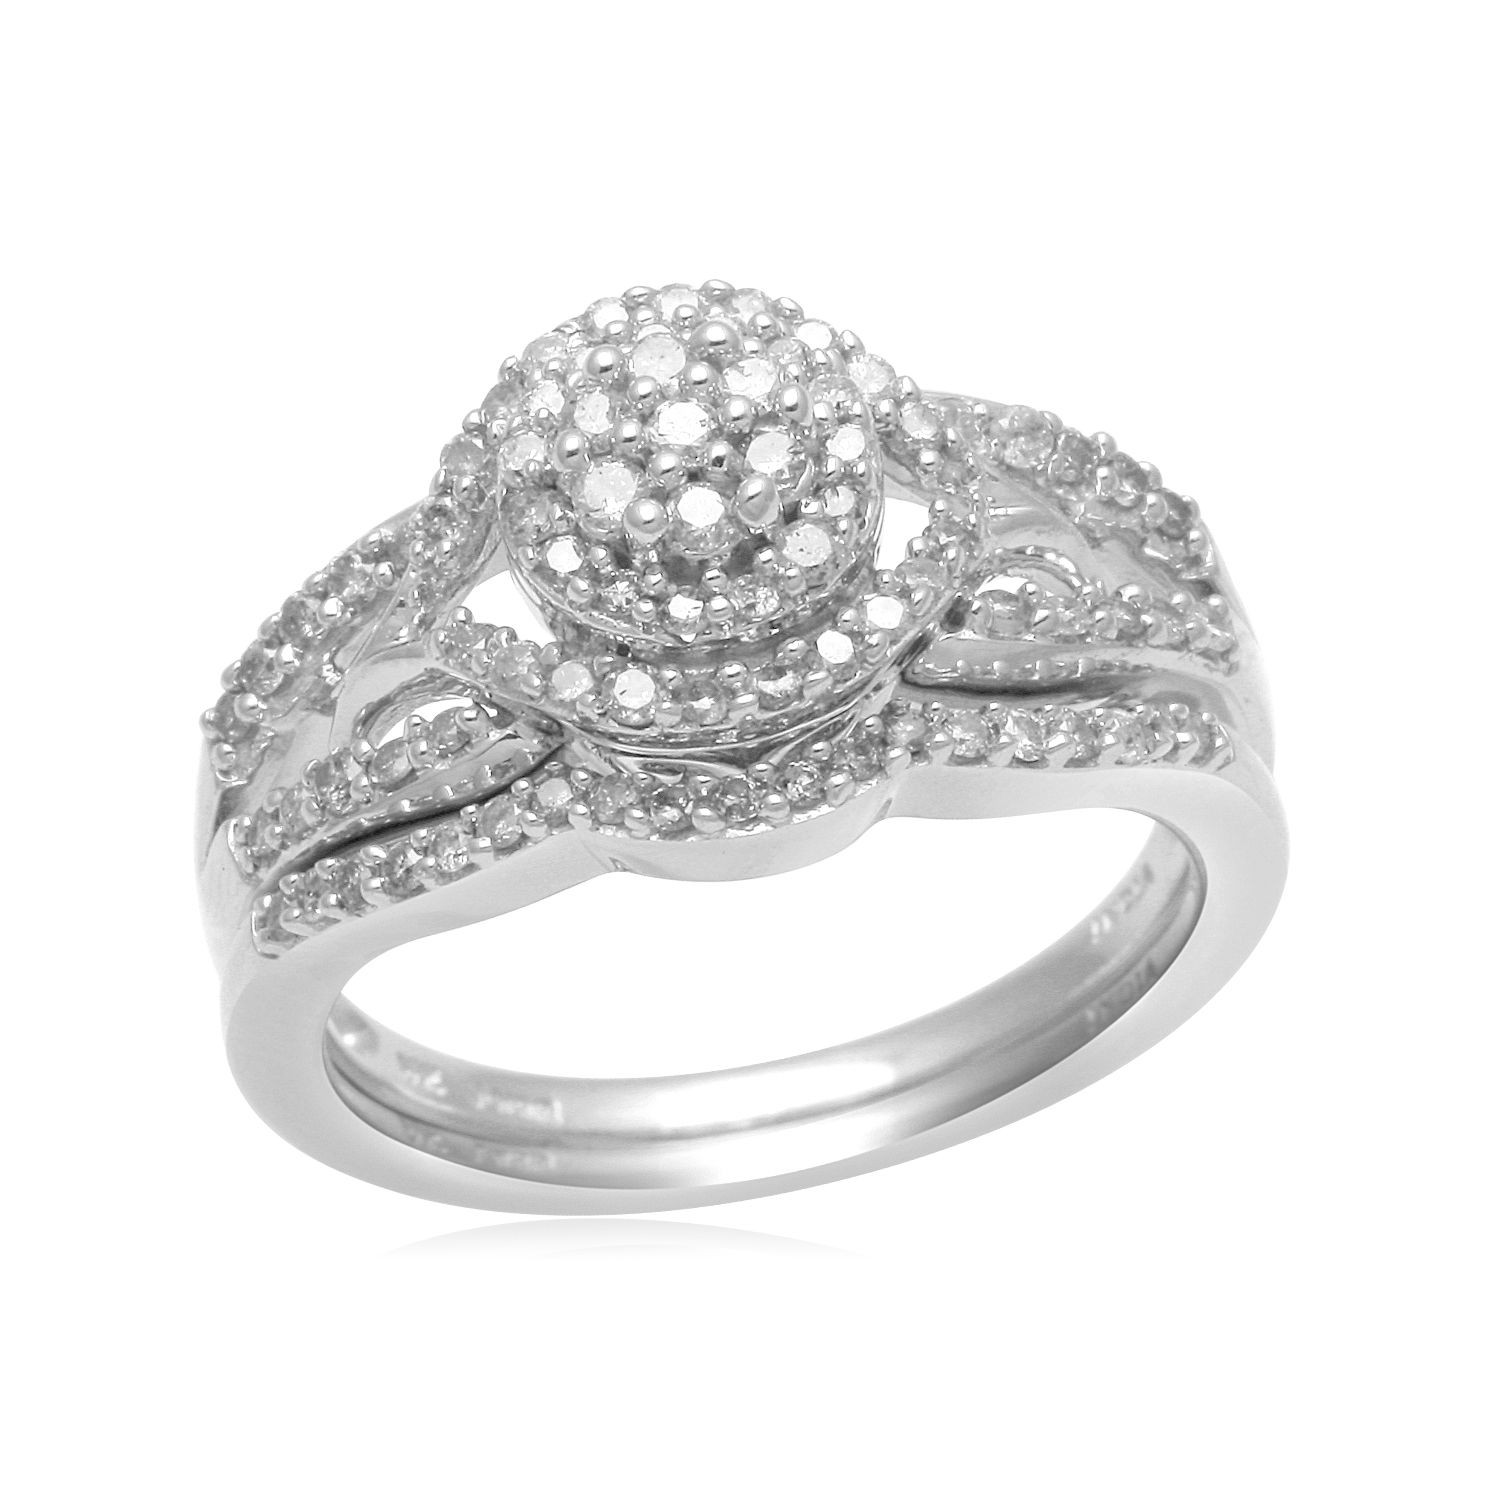 Kmart Wedding Ring Sets
 Eternal Treasures Sterling Silver 1 2ct Round Diamond